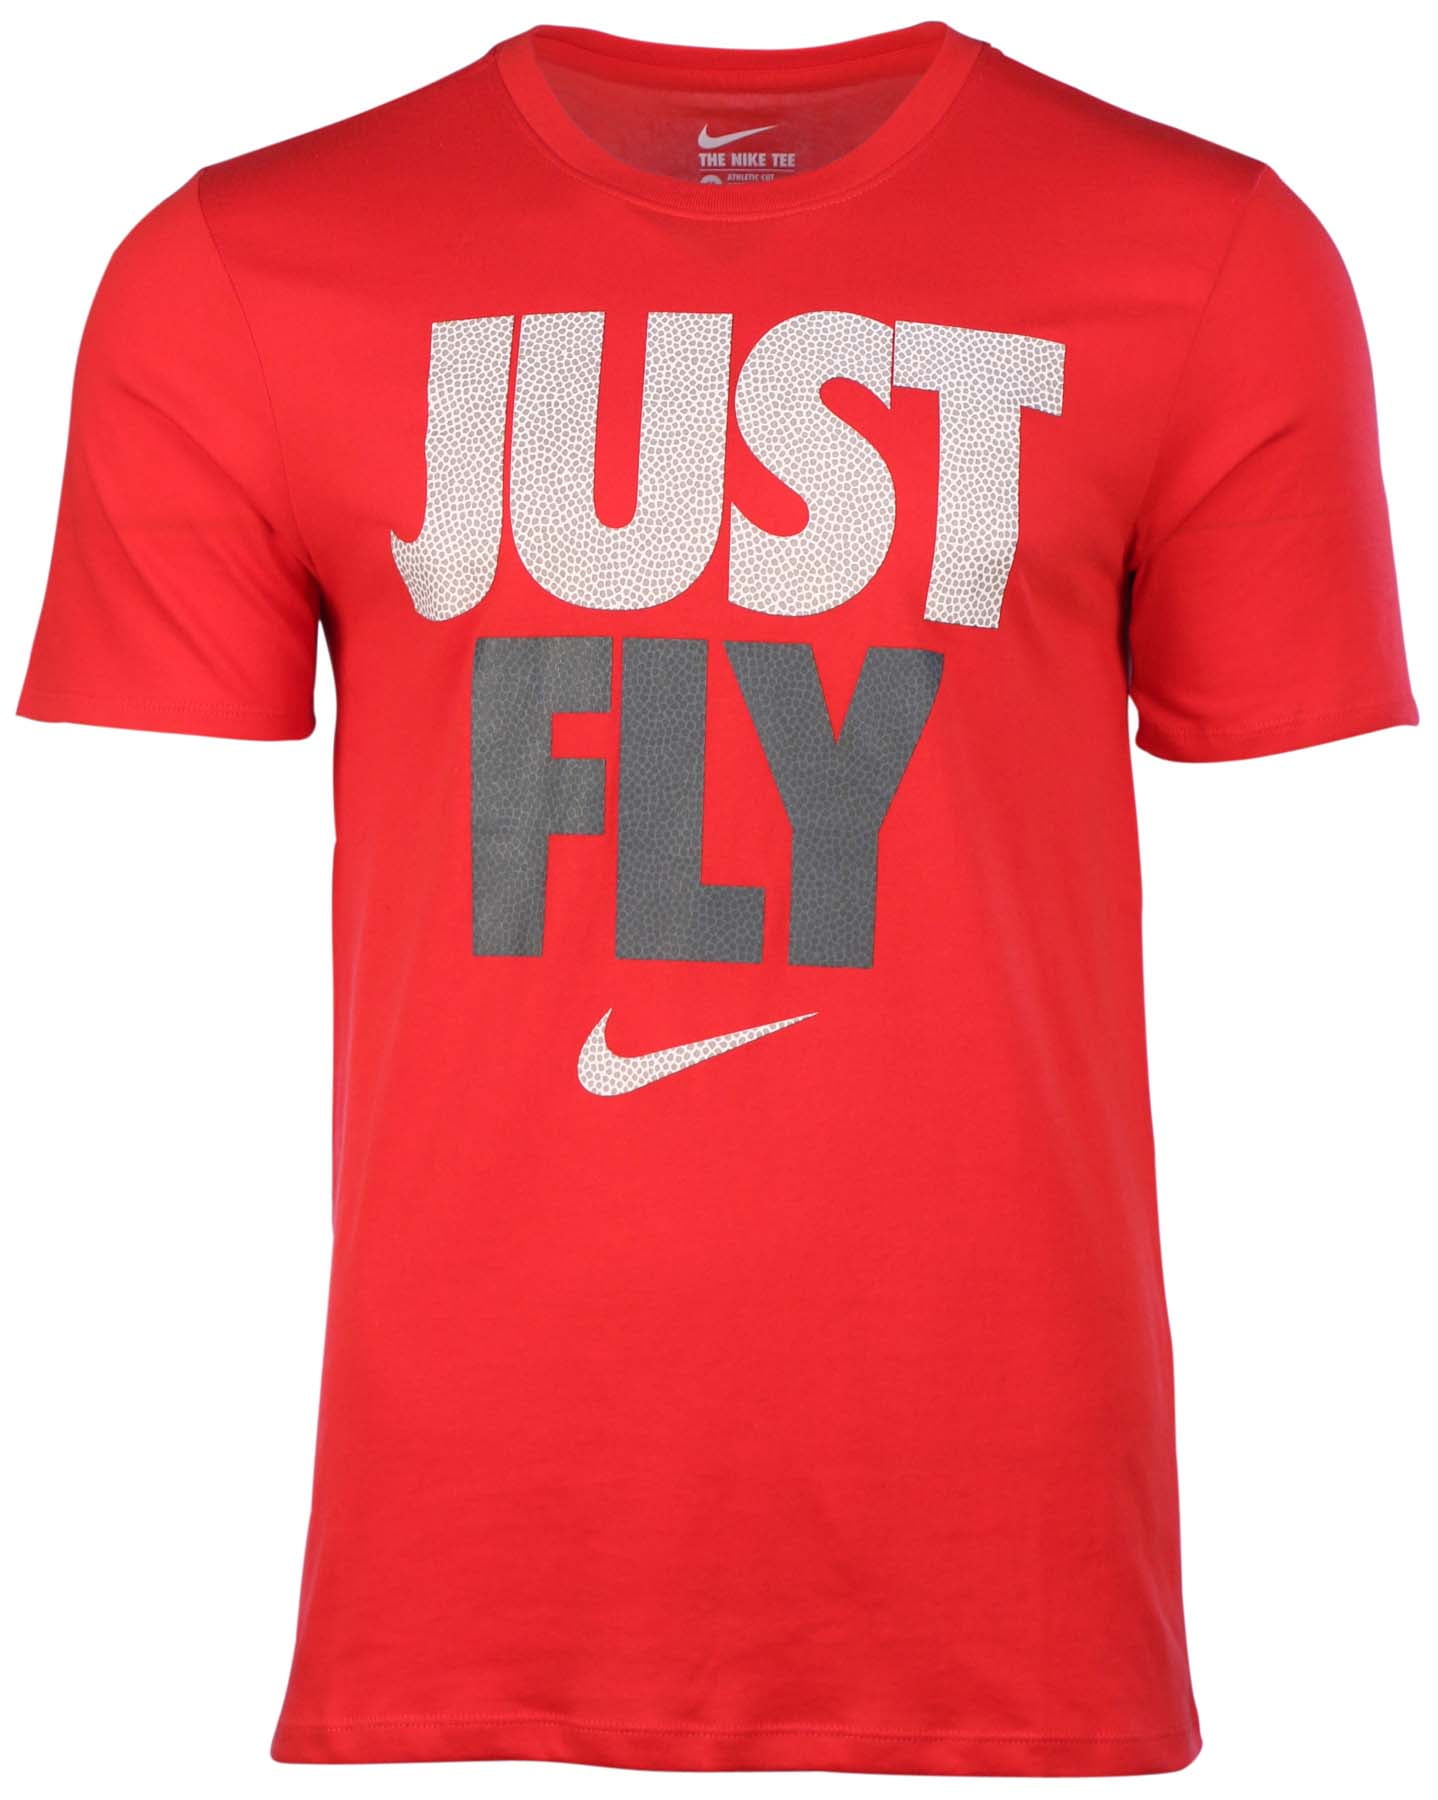 Nike - Nike Men's Dri-Fit Just Fly Basketball T-Shirt - Walmart.com ...